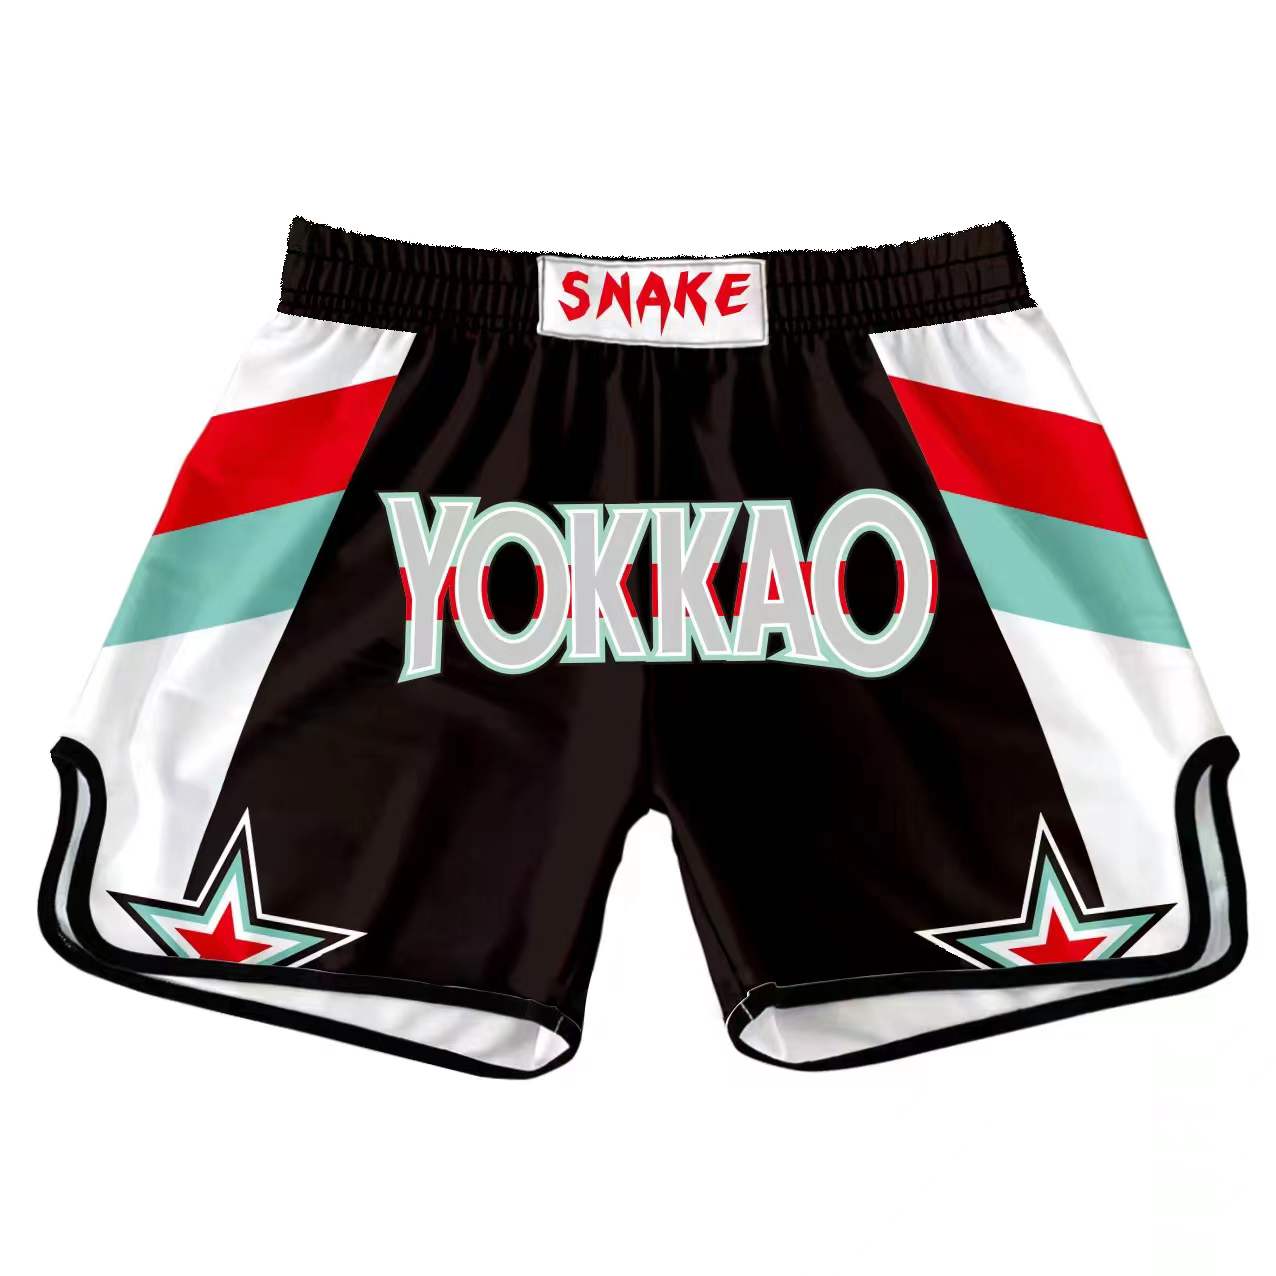 2022 Muay Thai Shorts Cool Floral Prints MMA Boxing Pants KickBoxing Men Fight Grappling Sportswear Boxing Short Pant Wholesale